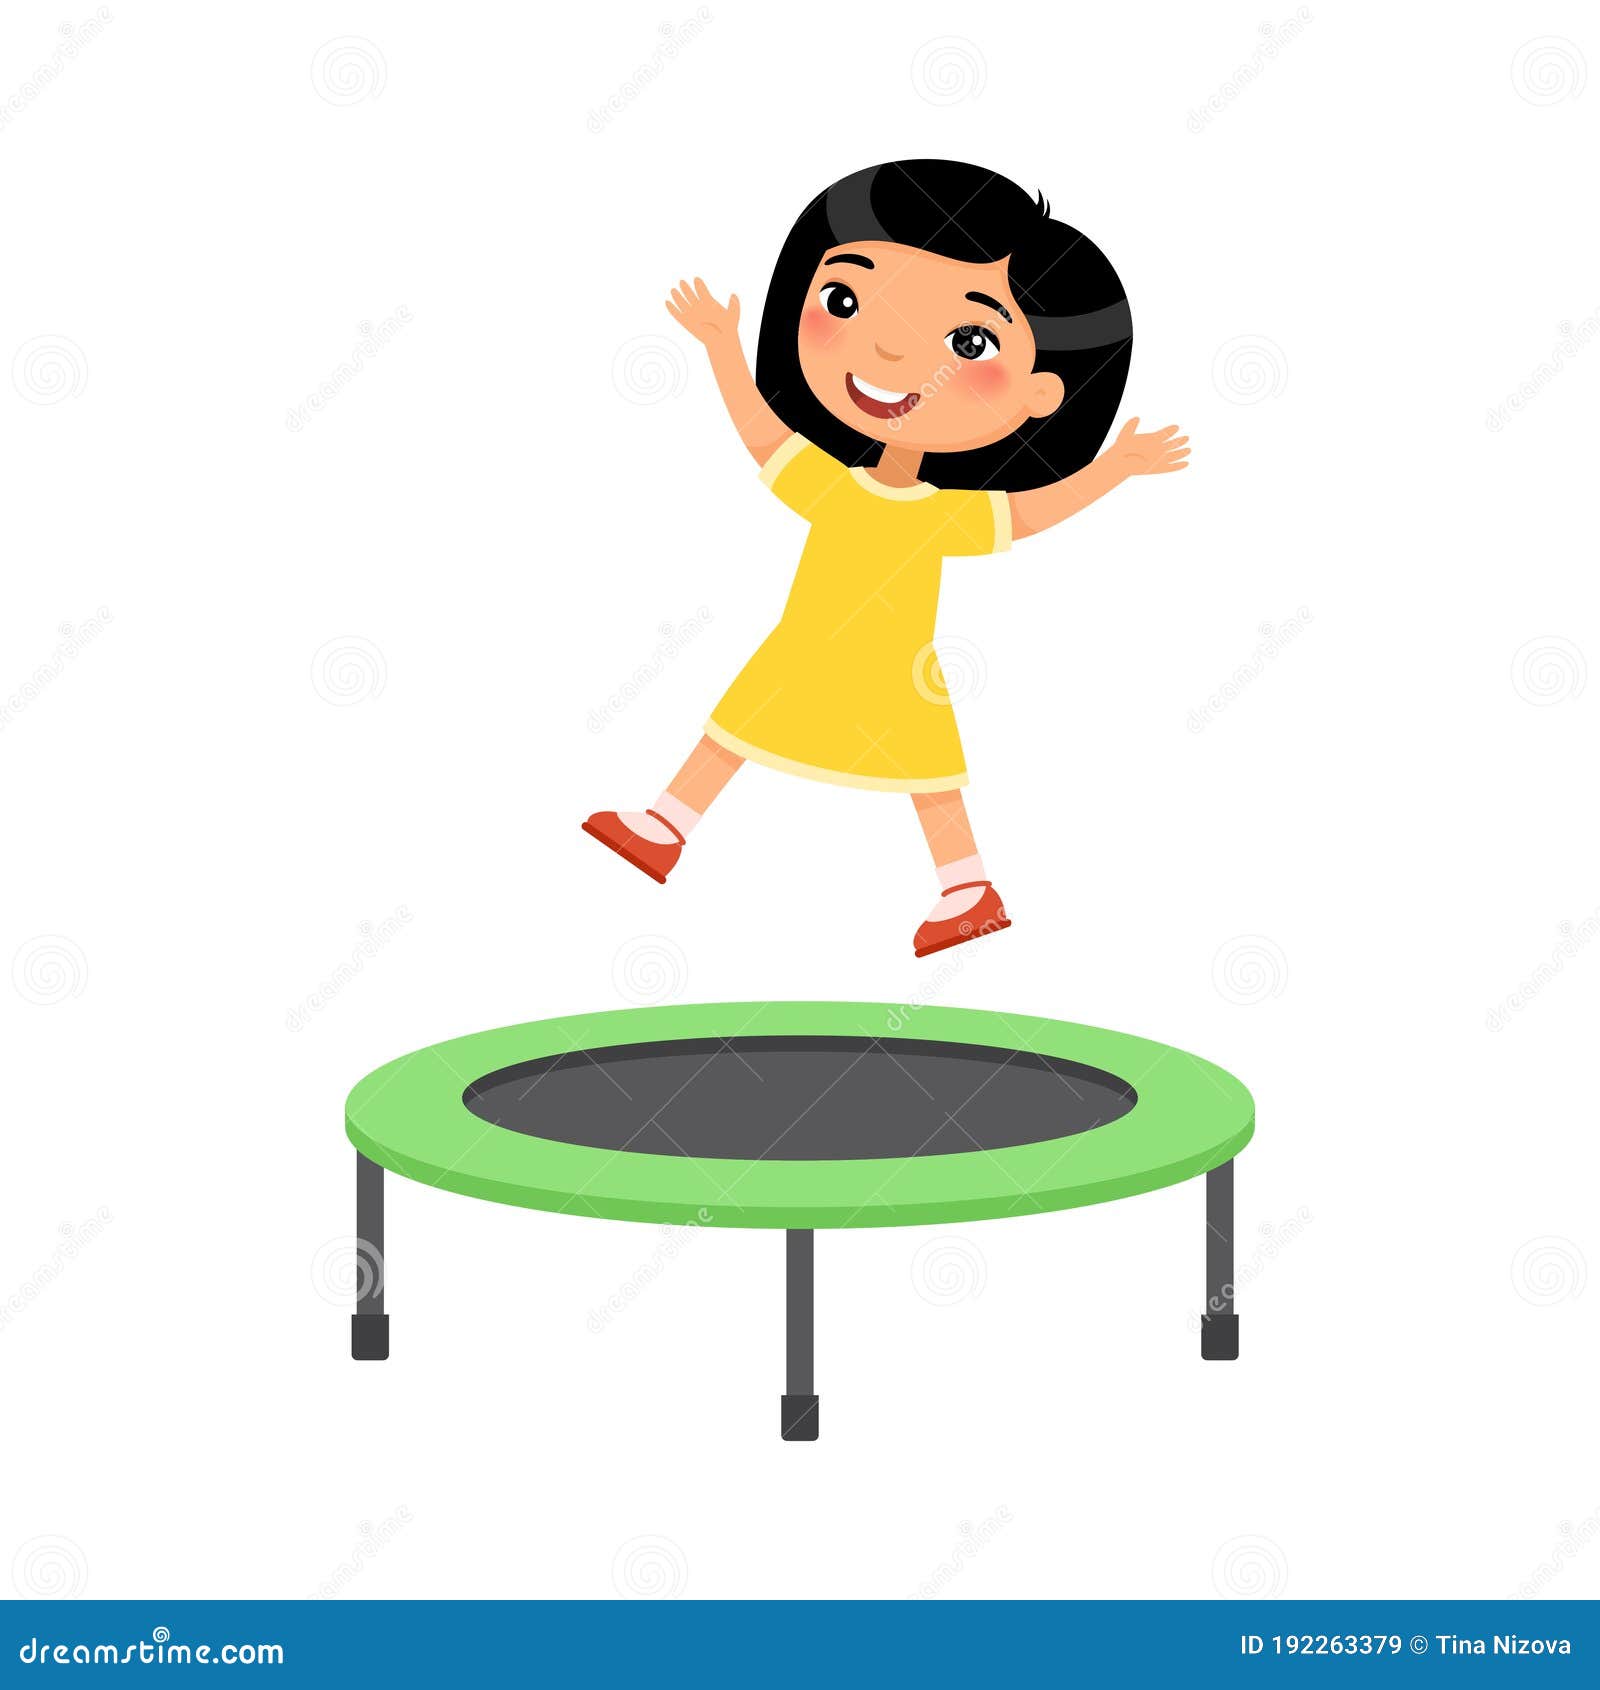 gitaar Leggen zuurgraad Little Asian Girl Jumping on Trampoline Flat Vector Illustration. Happy  Sportive Child Having Fun, Playing Stock Vector - Illustration of hand,  jump: 192263379